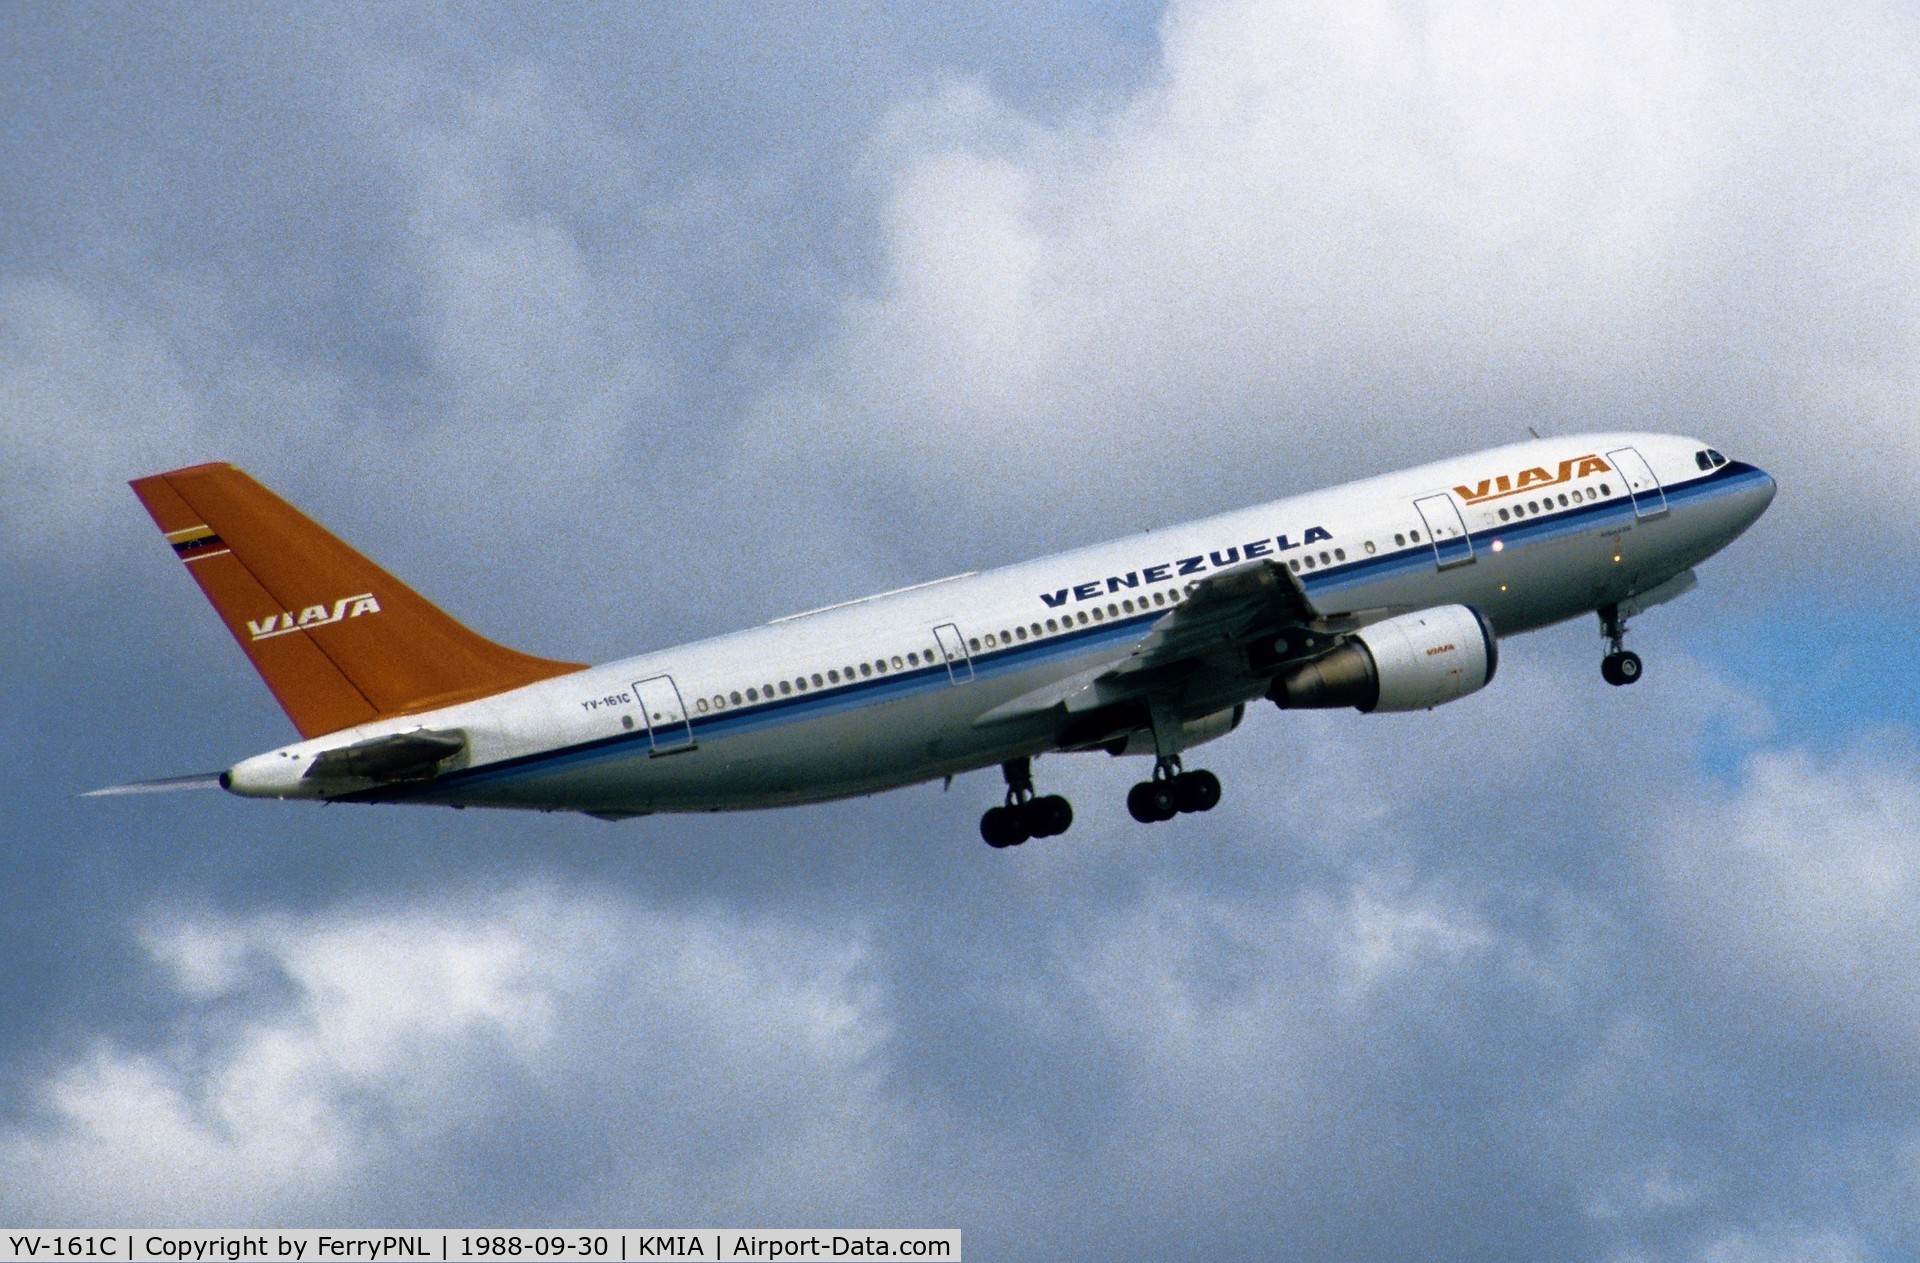 YV-161C, 1979 Airbus A300B4-203 C/N 075, Viasa A300 taking-off